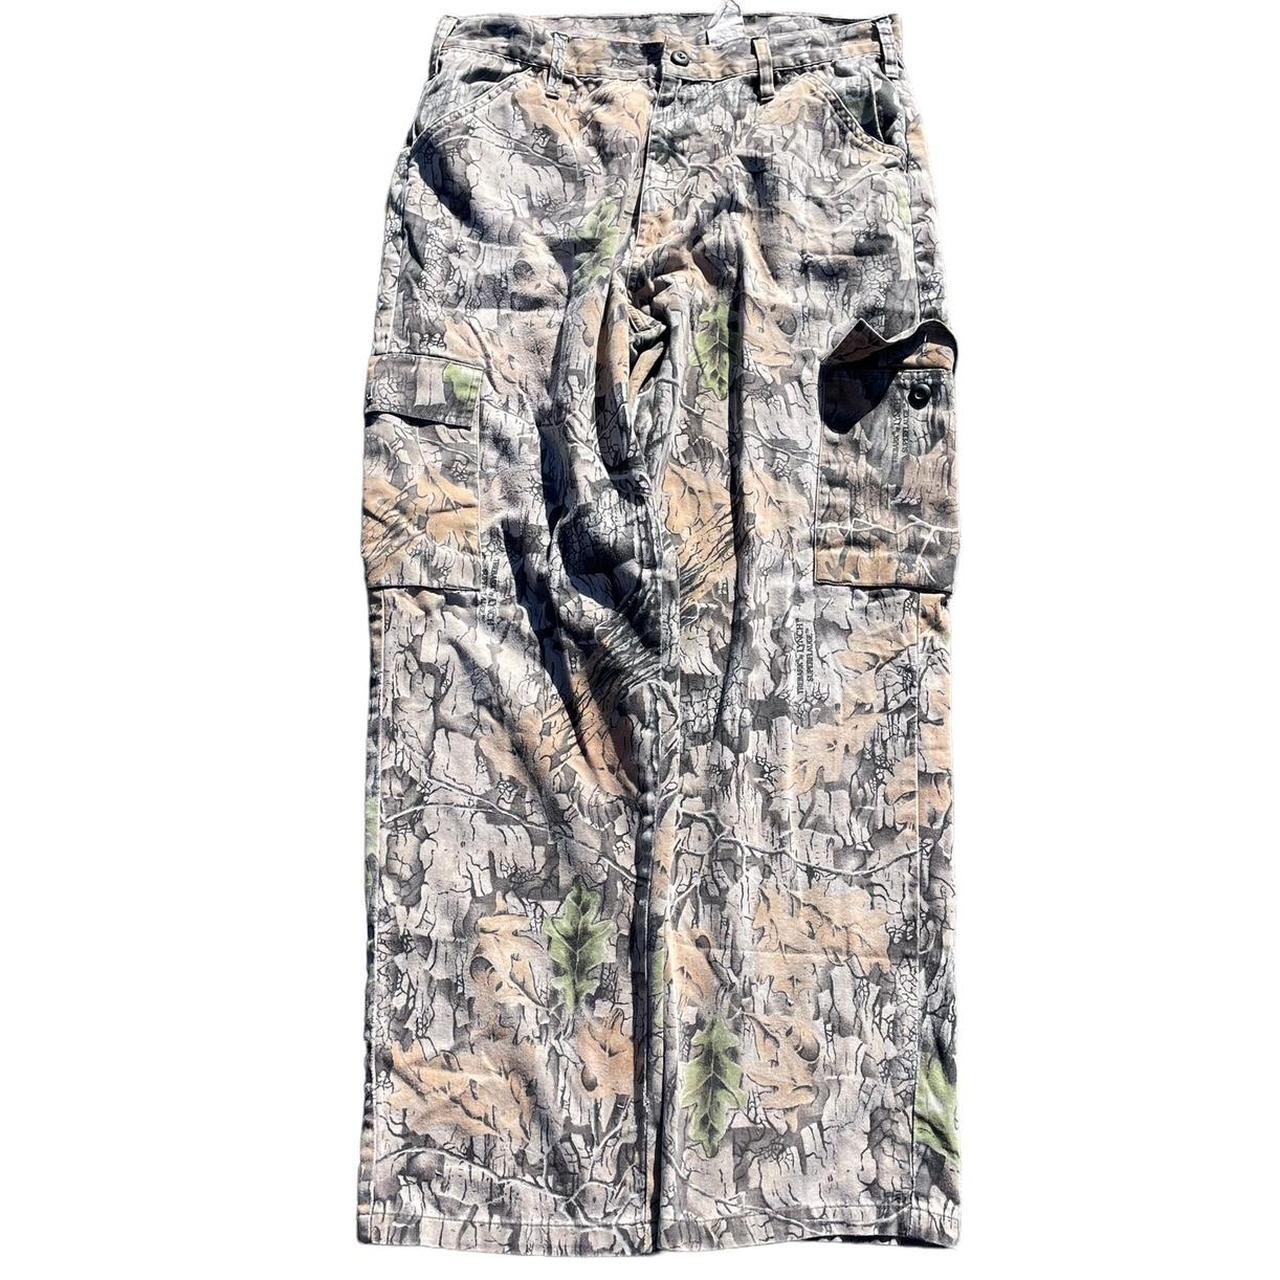 Realtree style camo army pants - Size: 29 - 32 x 32 - Depop